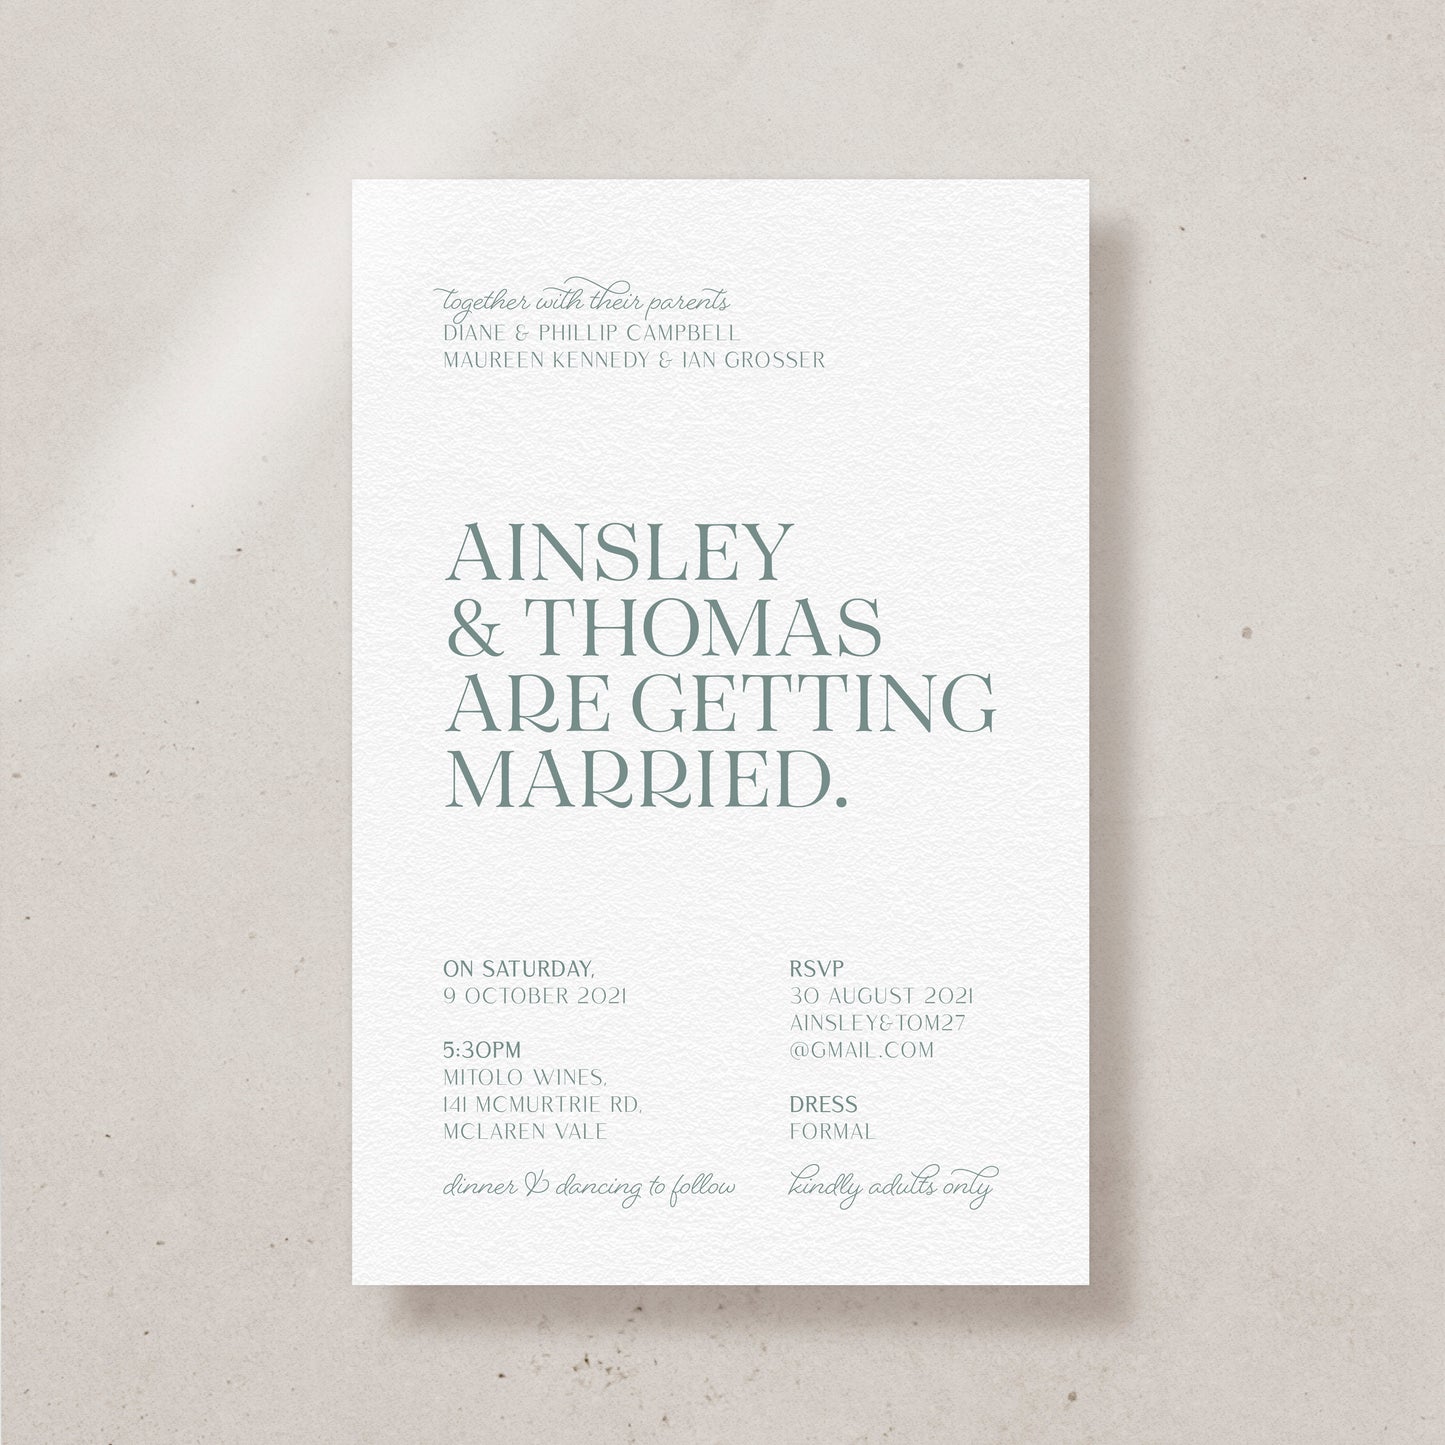 Ainsley Invitation